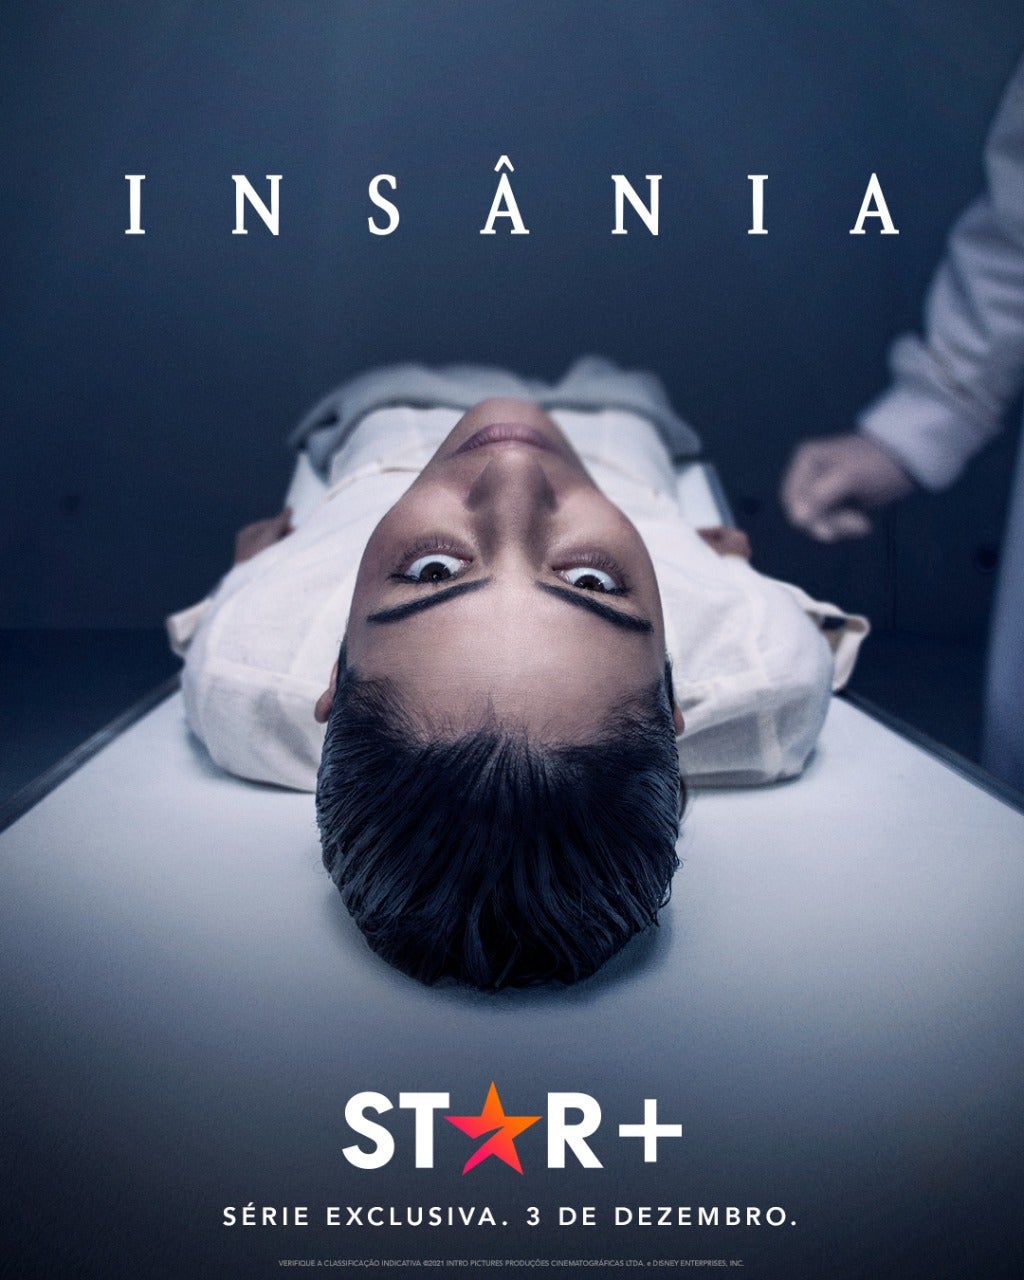 TV ratings for Insânia in India. Star+ TV series